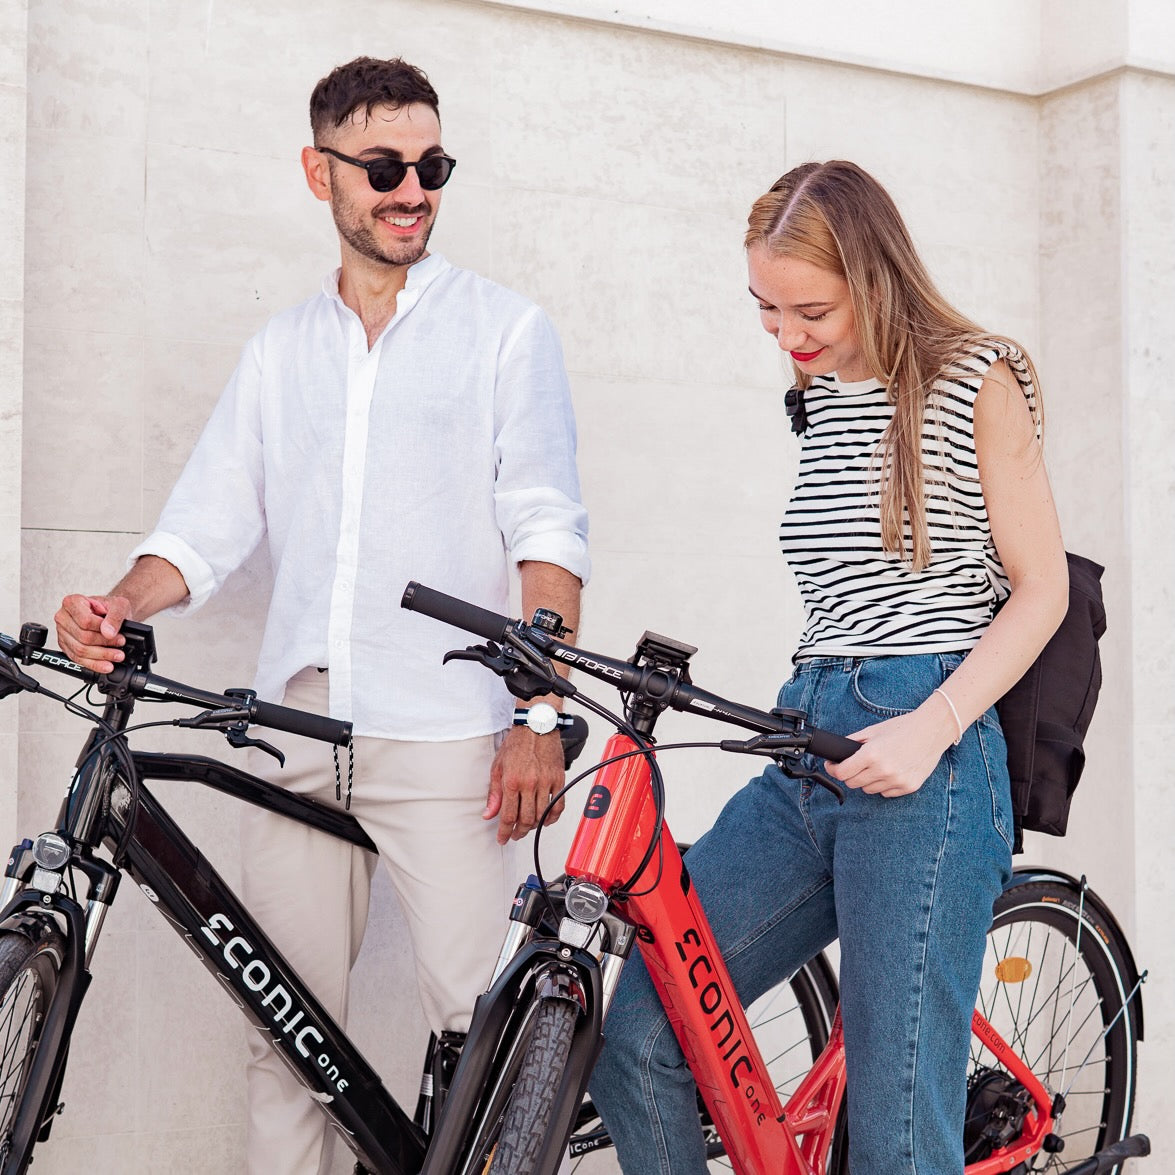 ECONIC ONE Comfort | Commute e-Bike | 100 km - UNFUEL